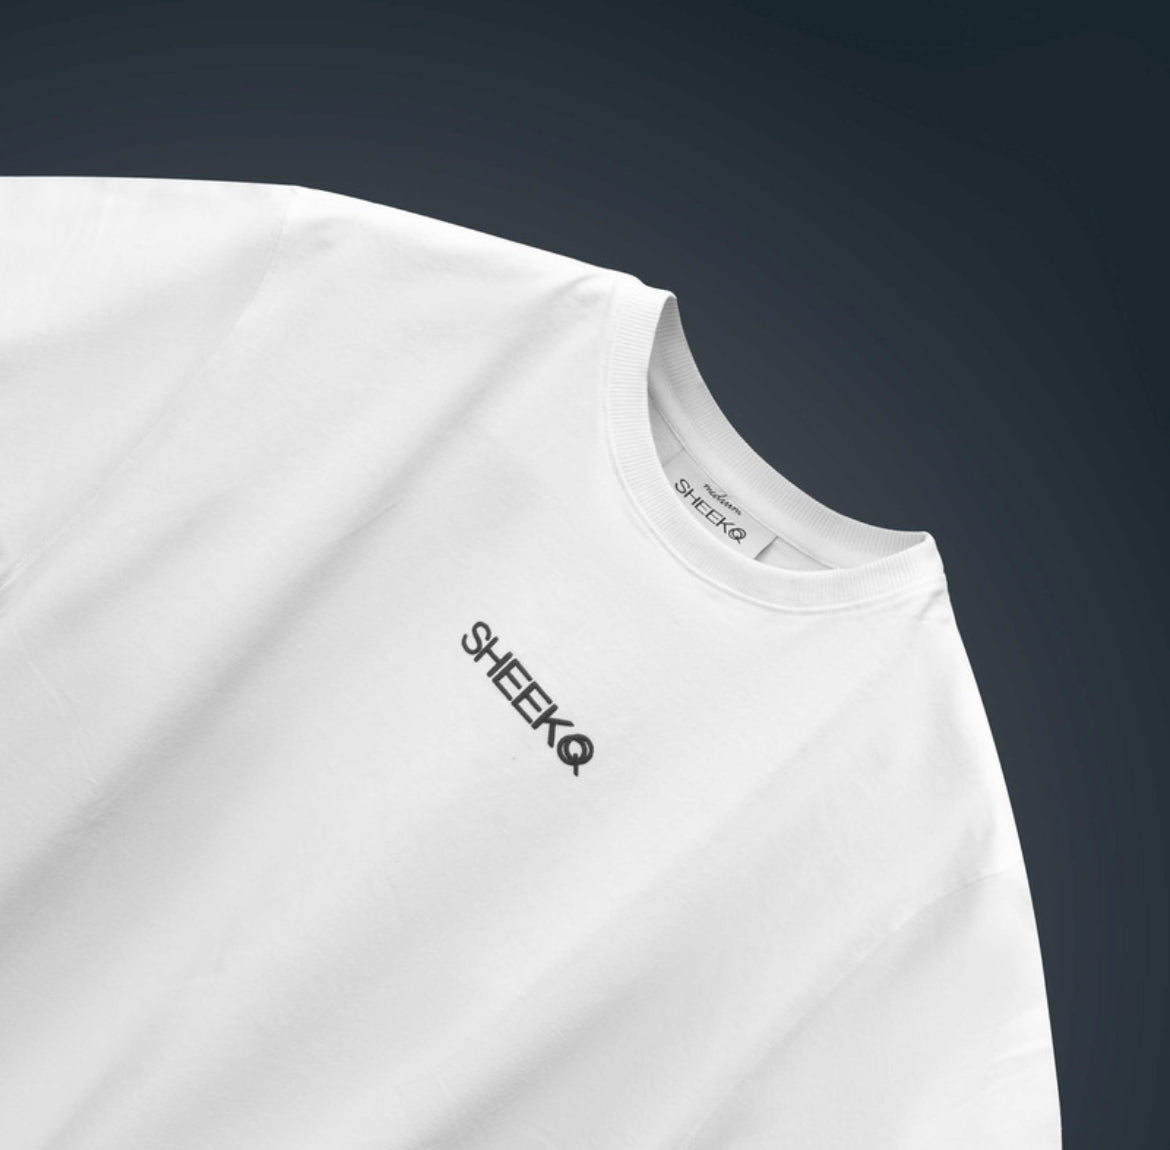 SHEEKQ Skelefly Oversized Statement T-shirt (White)